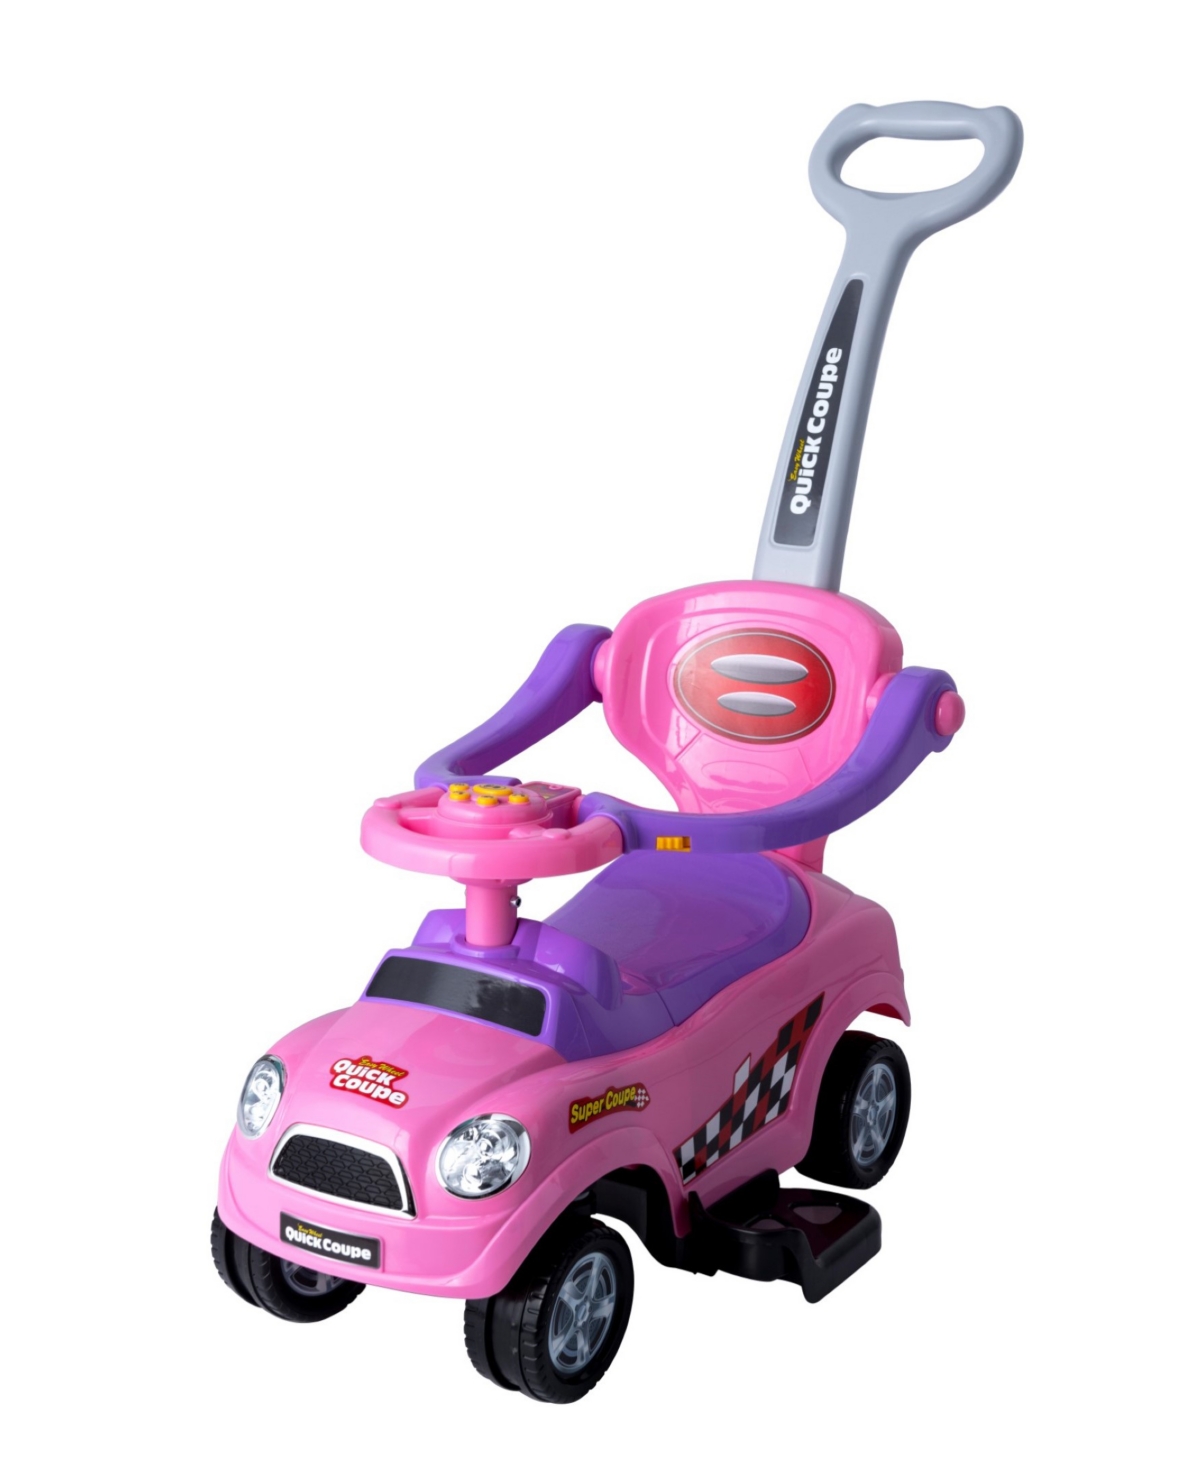 Freddo Toys 3 In 1, Stroller, Walker And Ride On Car In Pink